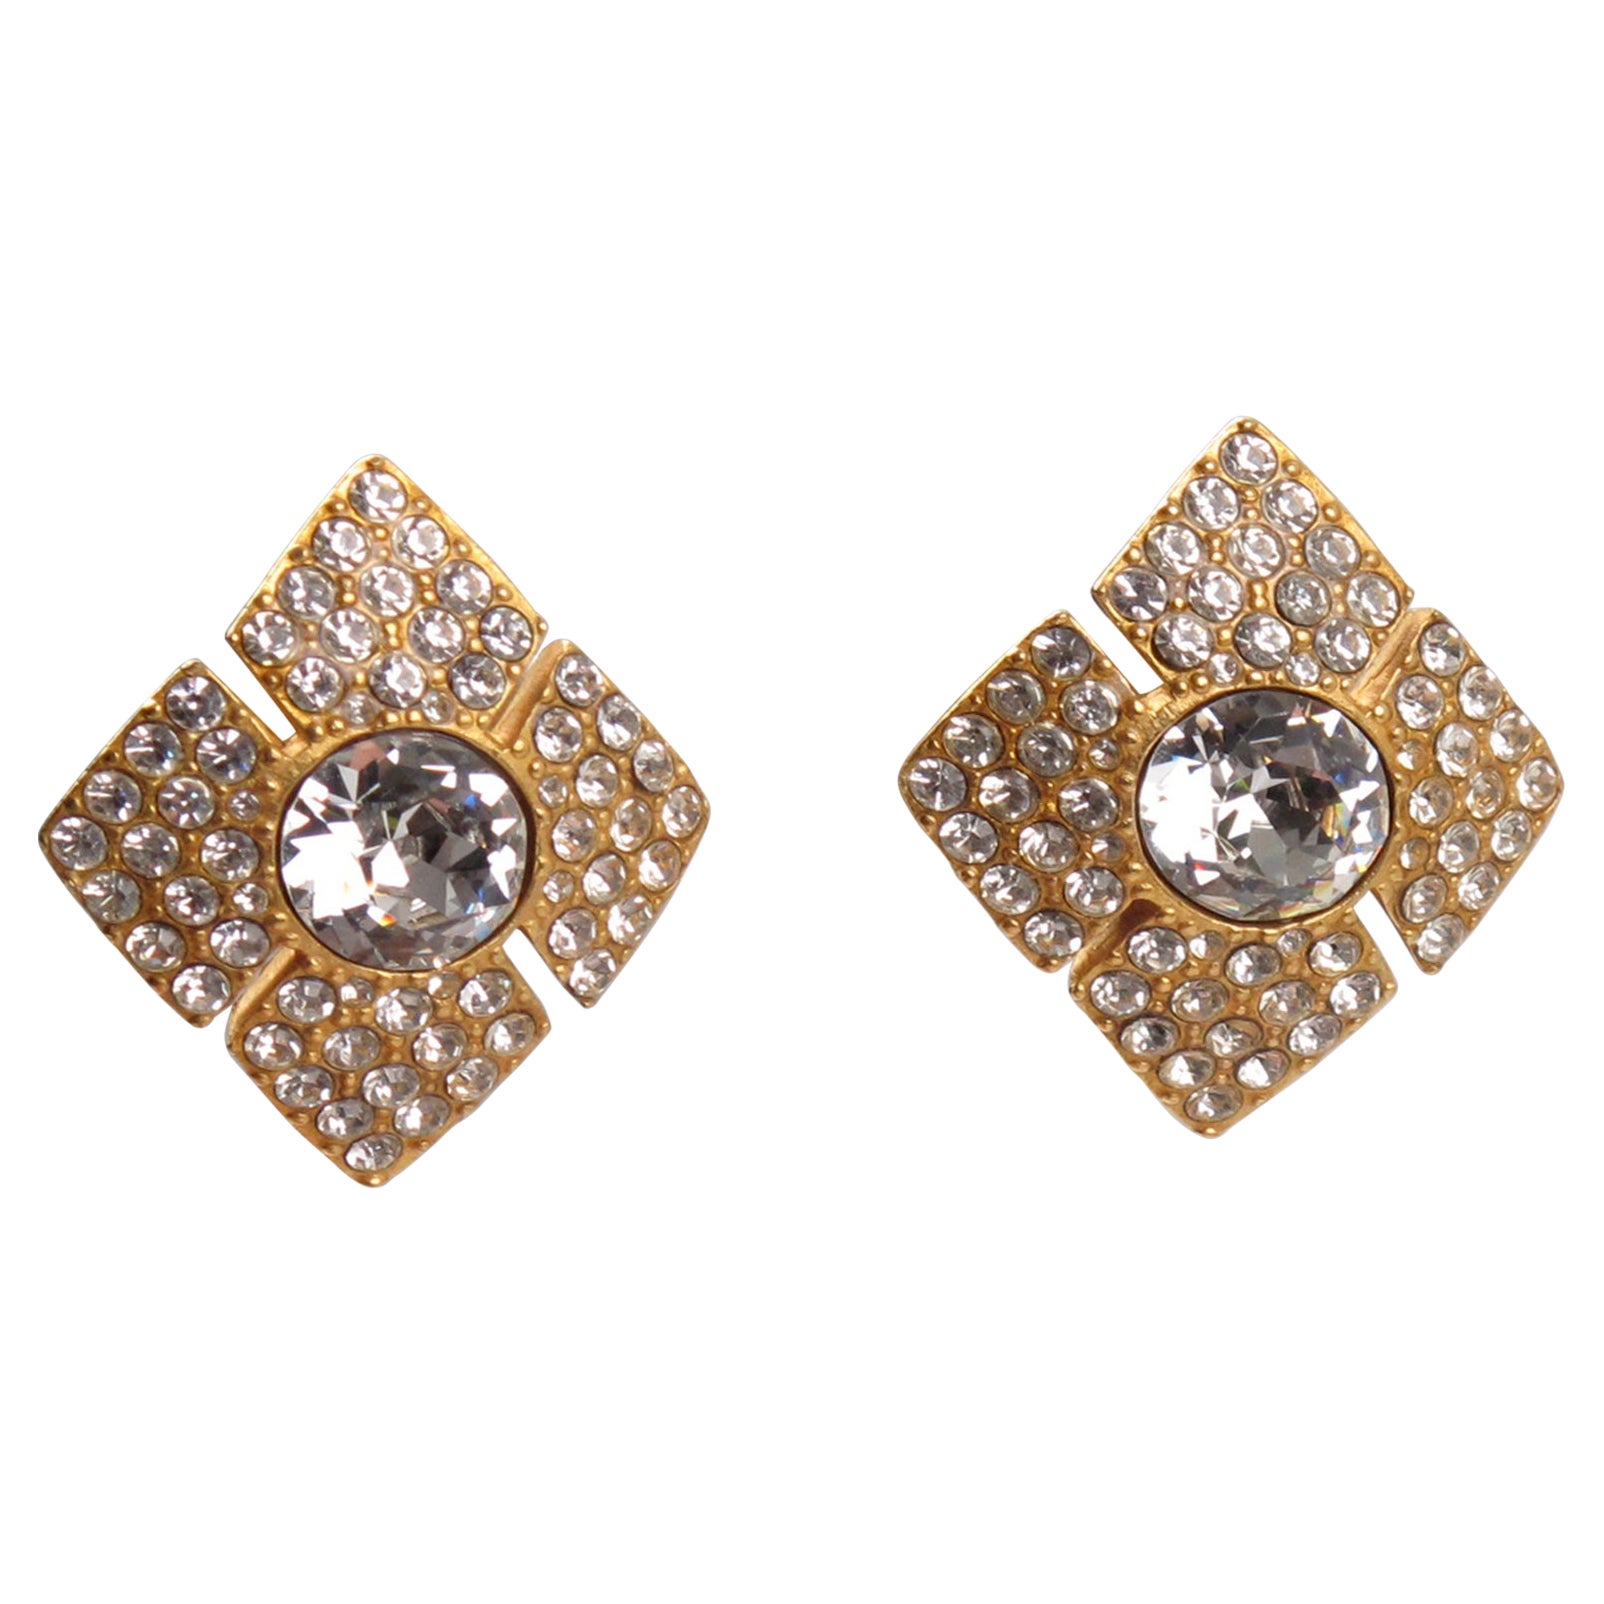 Christian Dior Diamant-förmige juwelenbesetzte Clip-Ohrringe